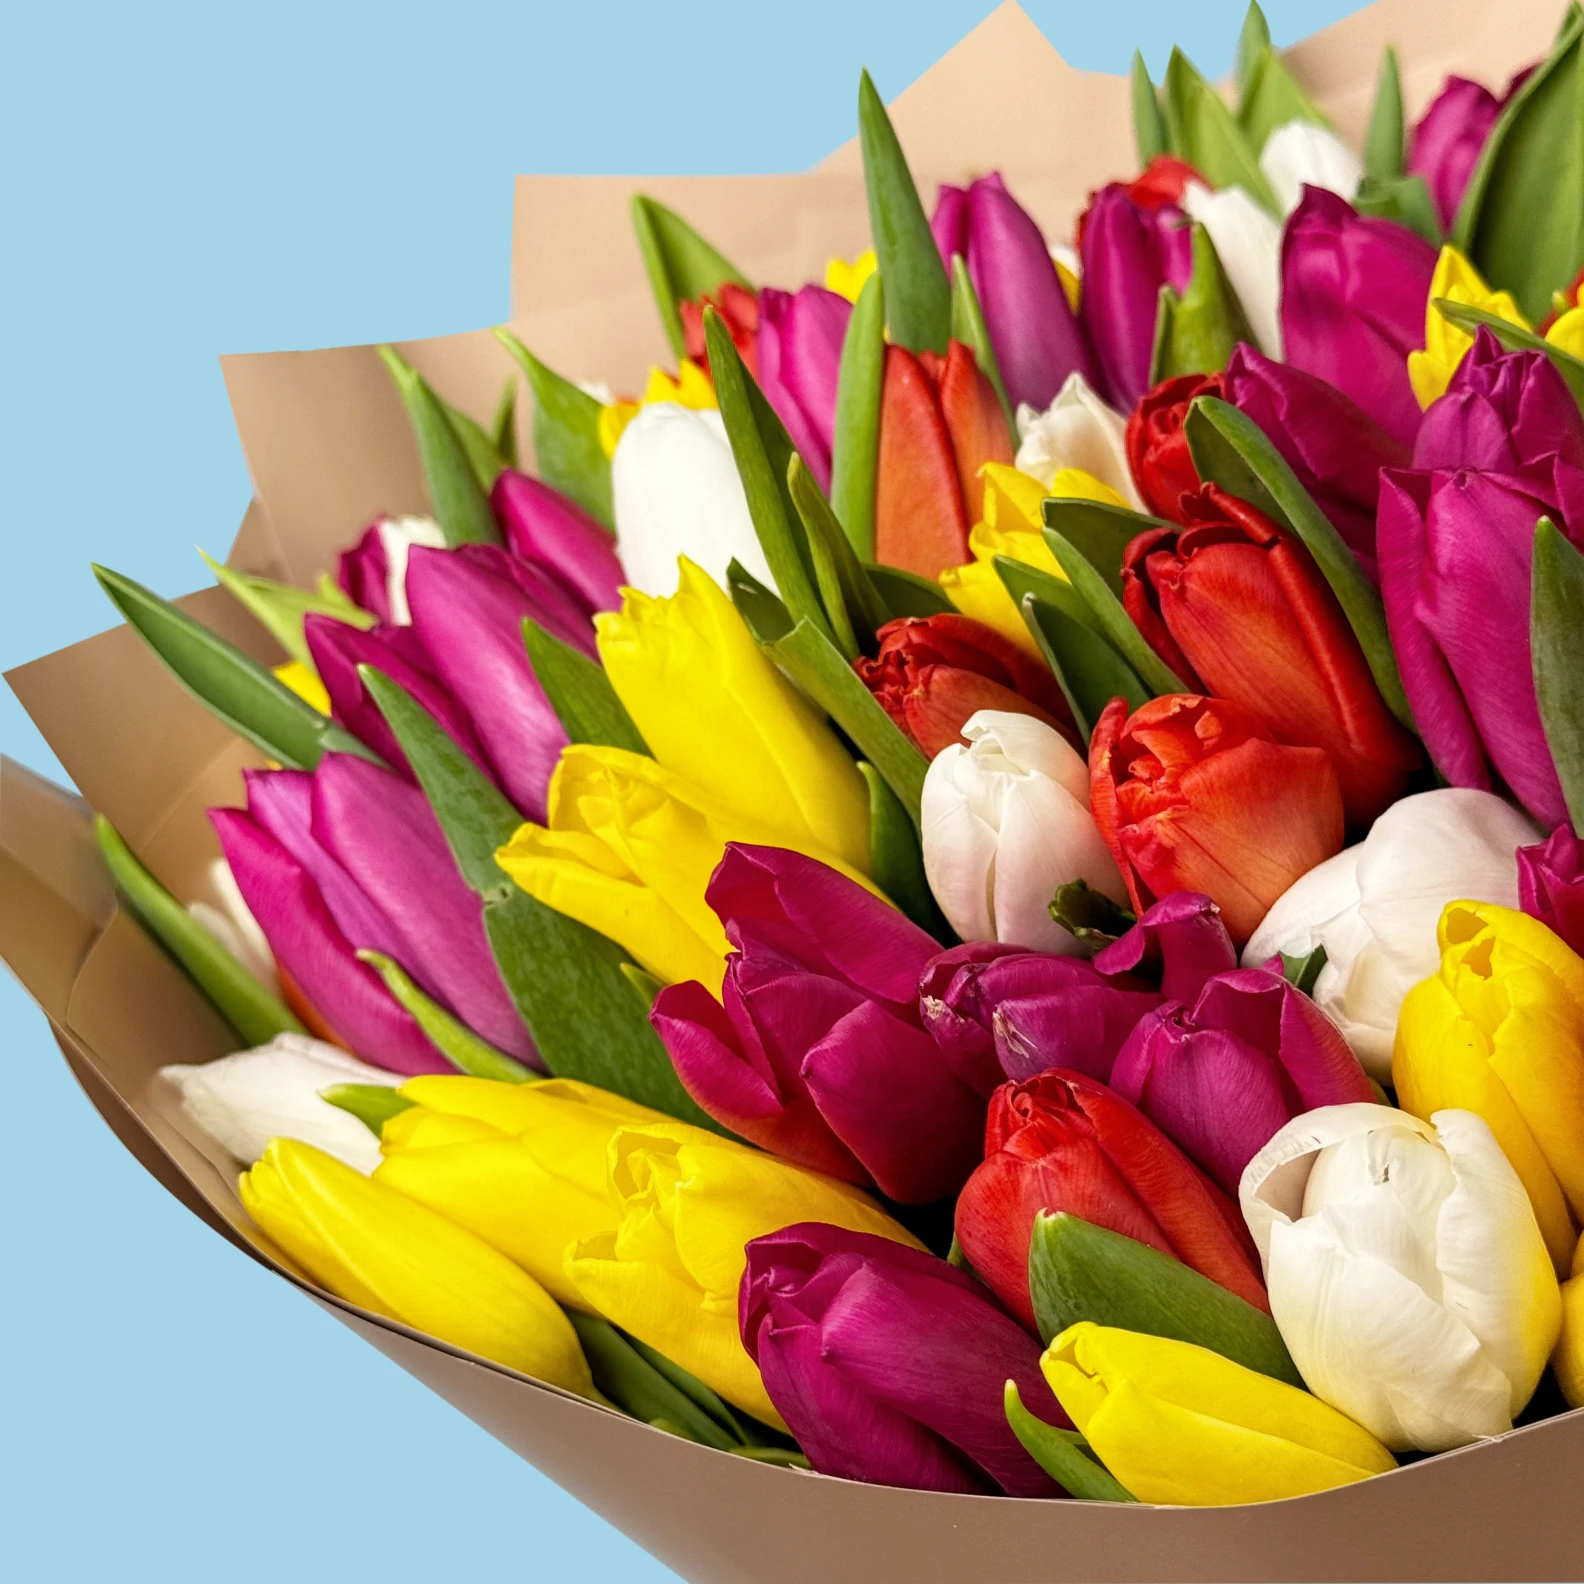 100 Mixed Tulips - image №3